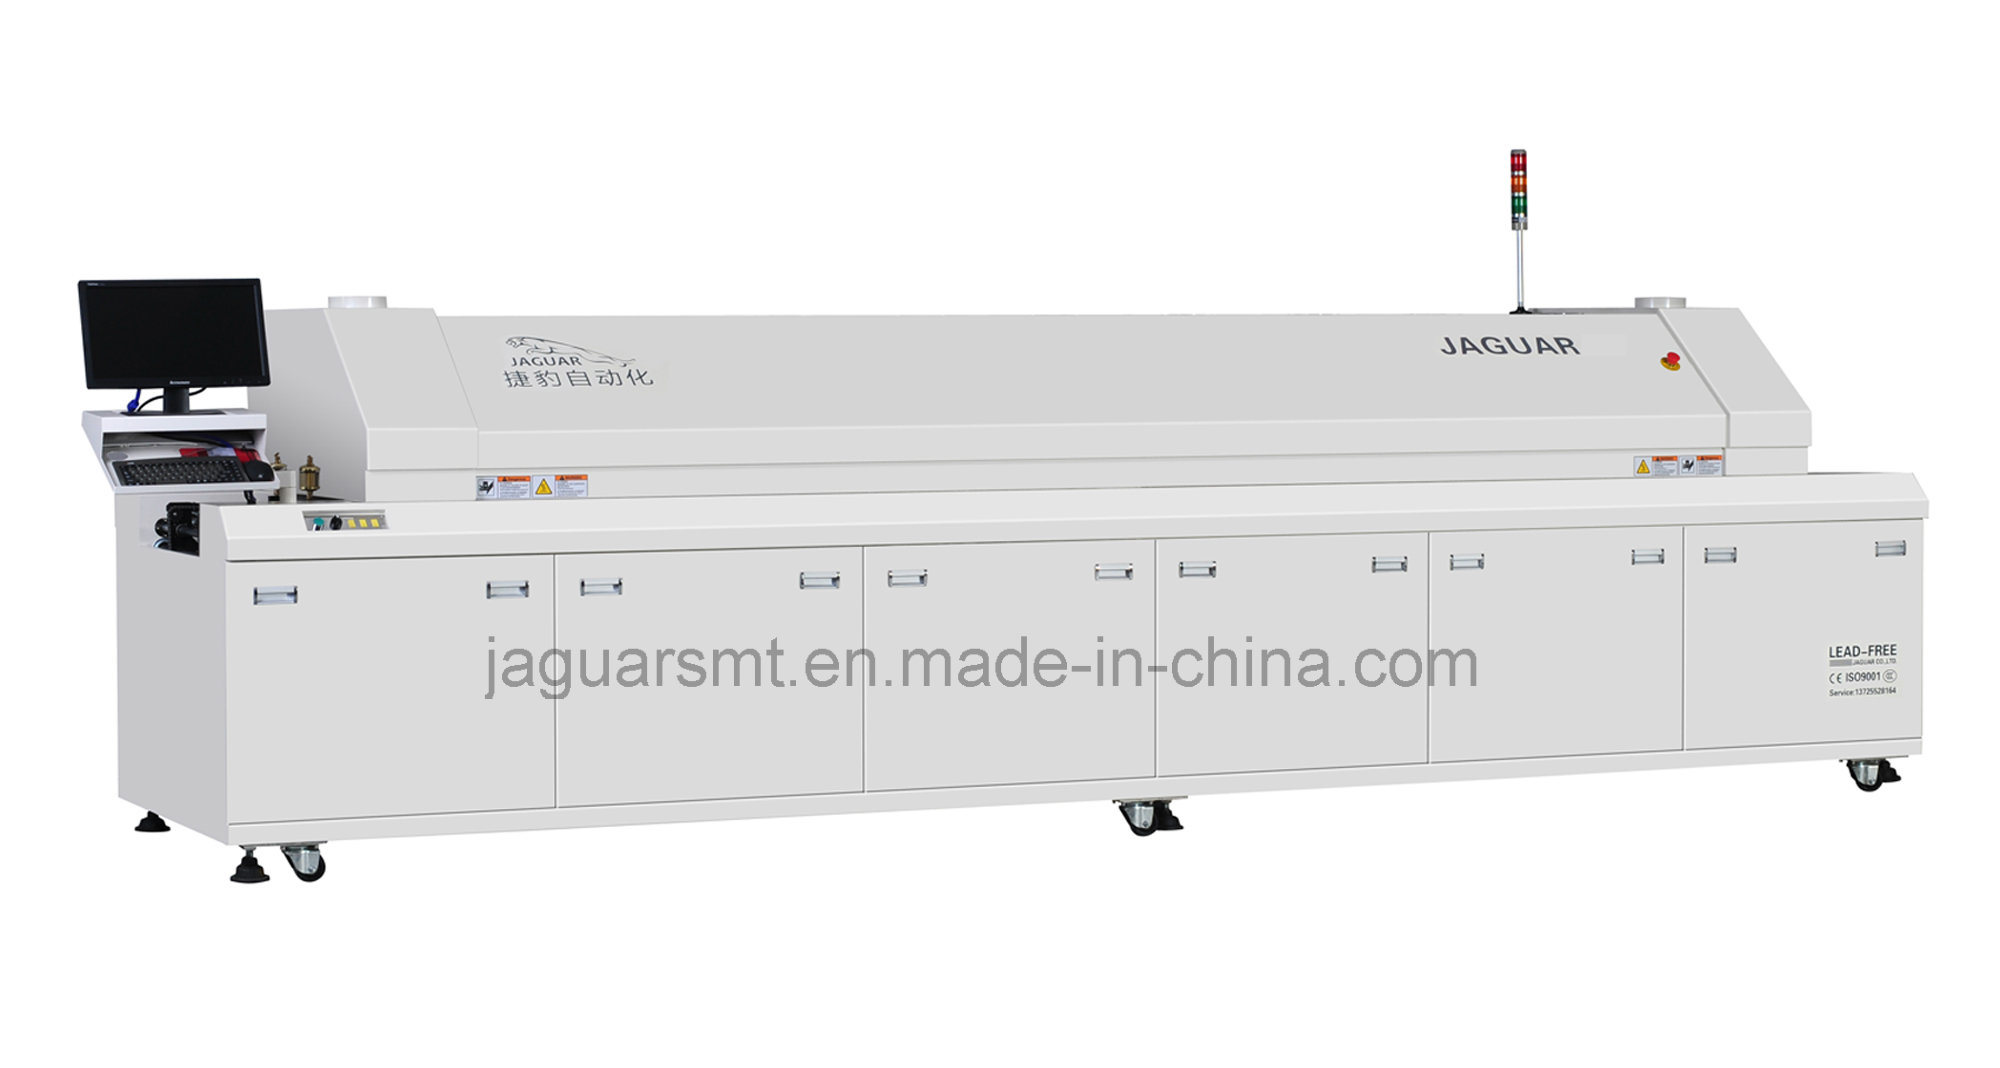 Jaguar 8 Zones Hot Air Lead-Free Reflow Solder Oven